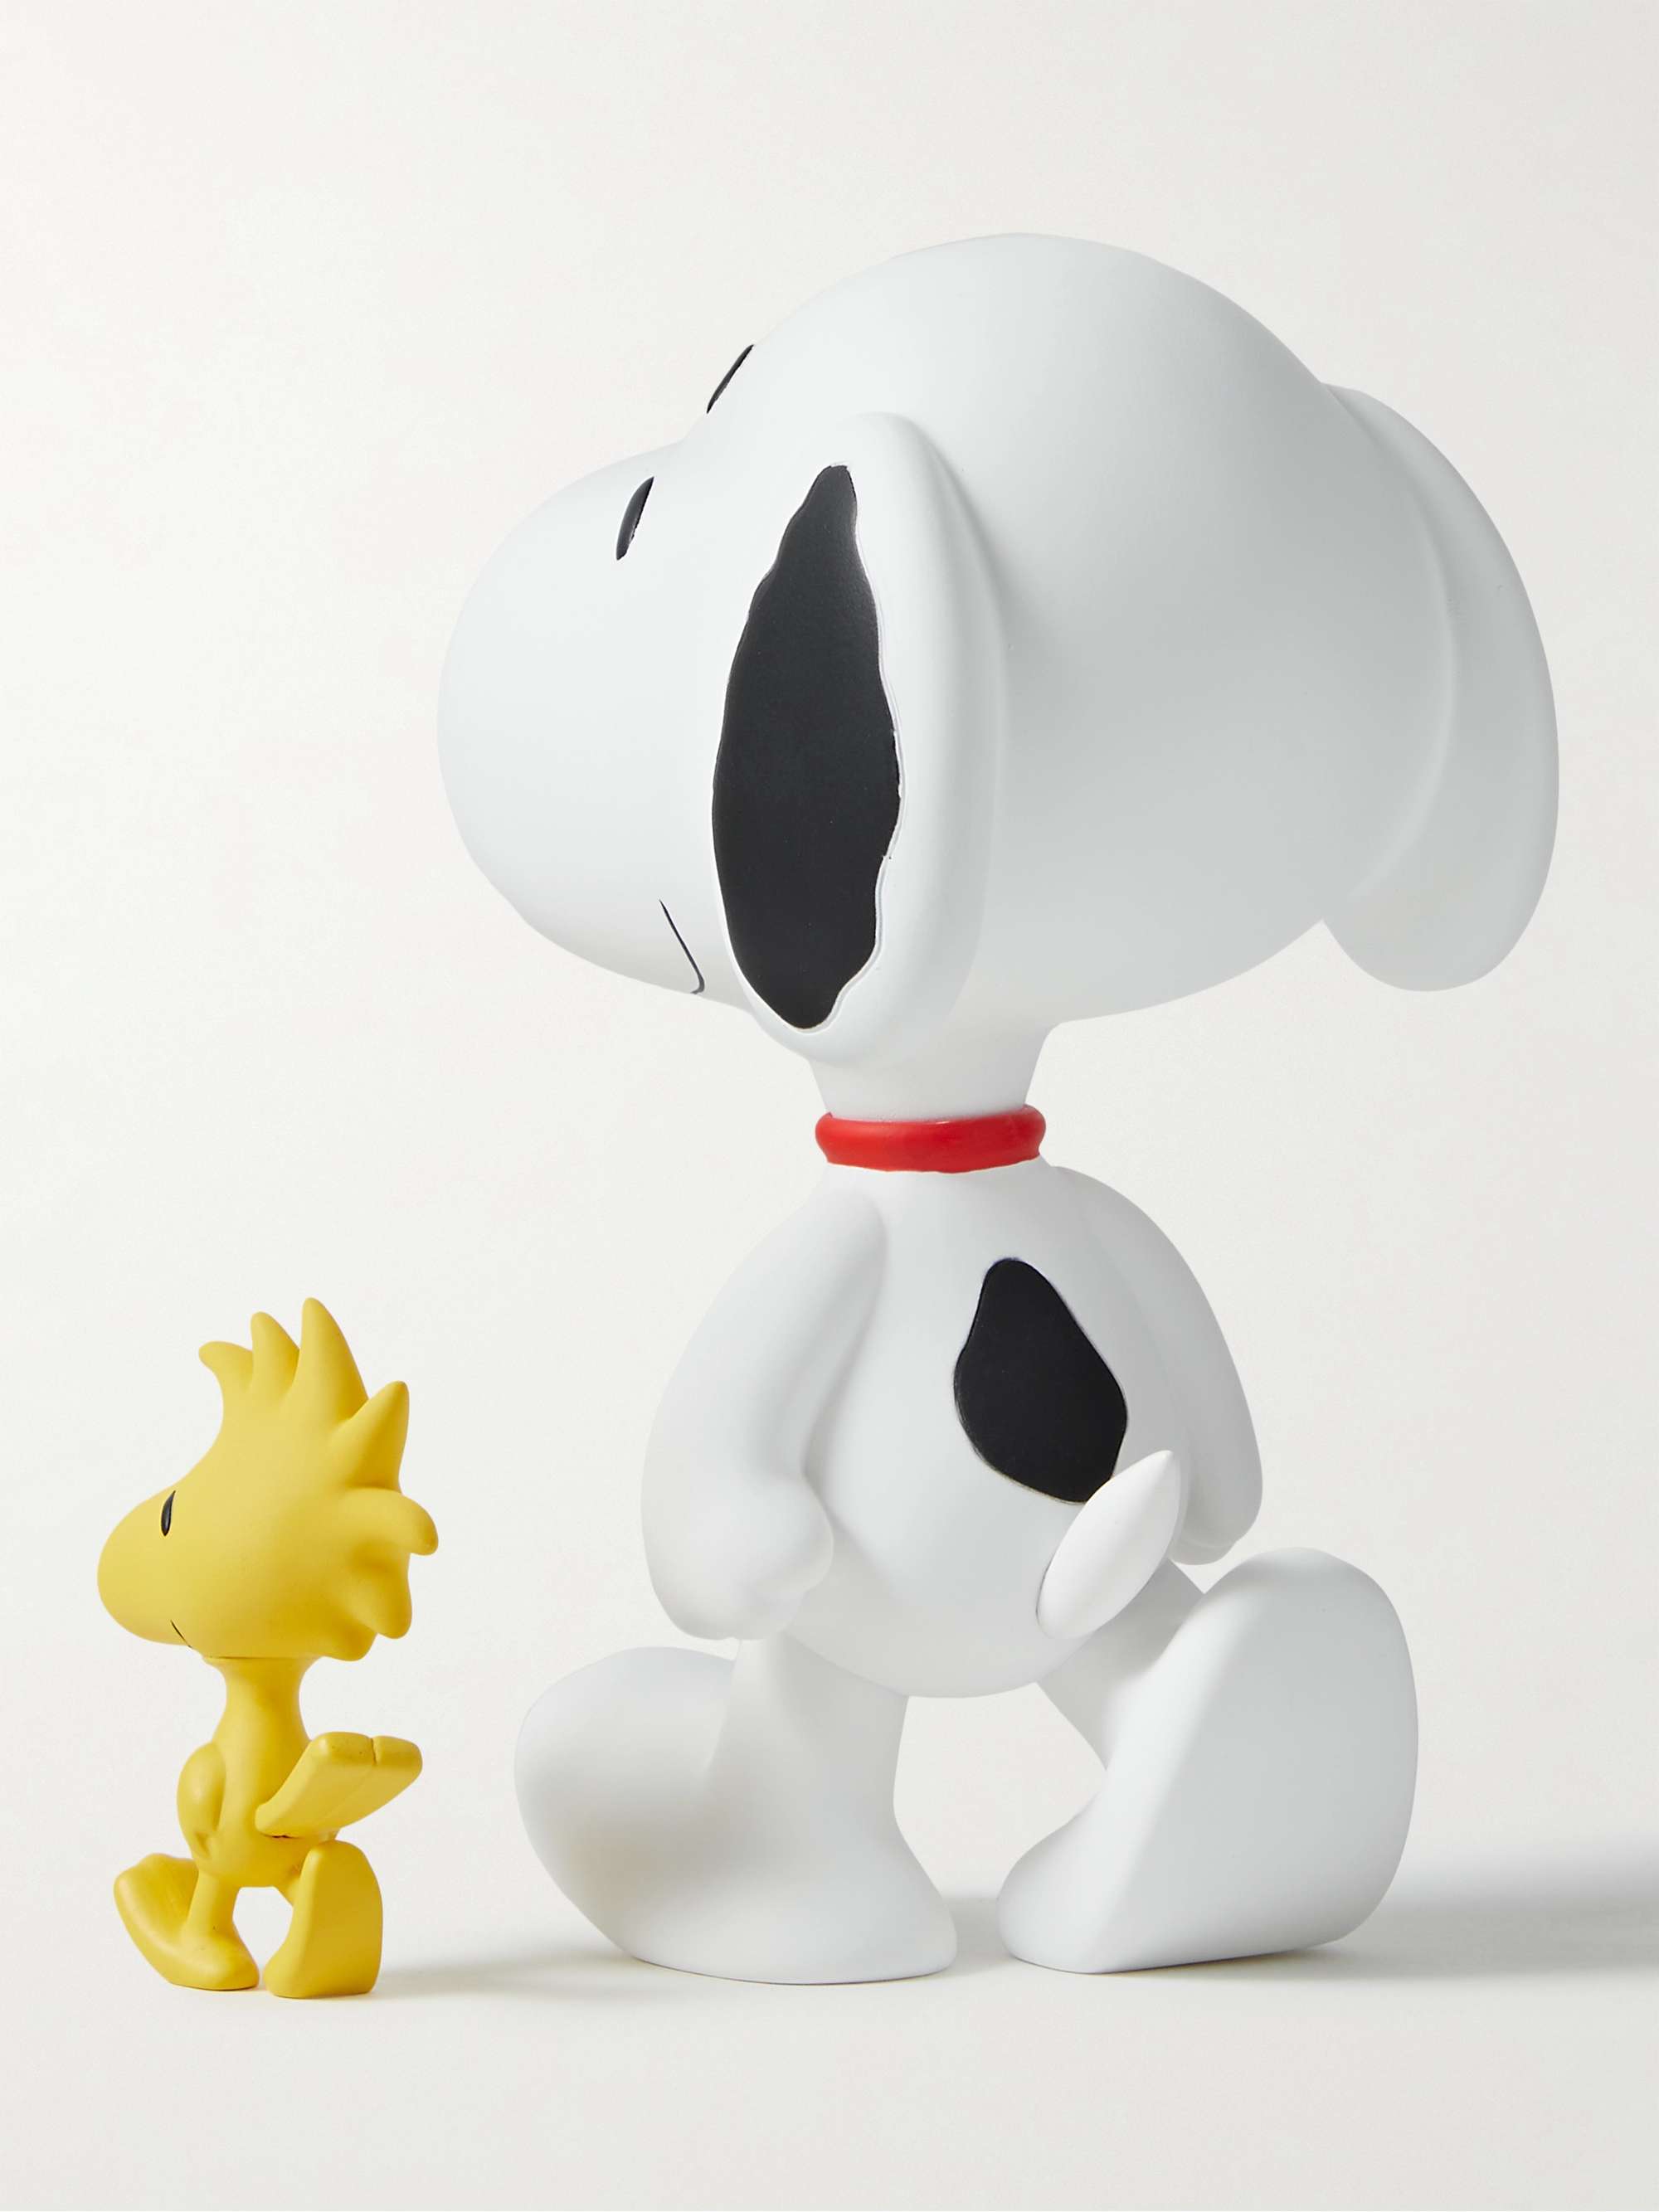 MEDICOM Ultra Detail Figure Peanuts Series: 1997 Snoopy and Woodstock